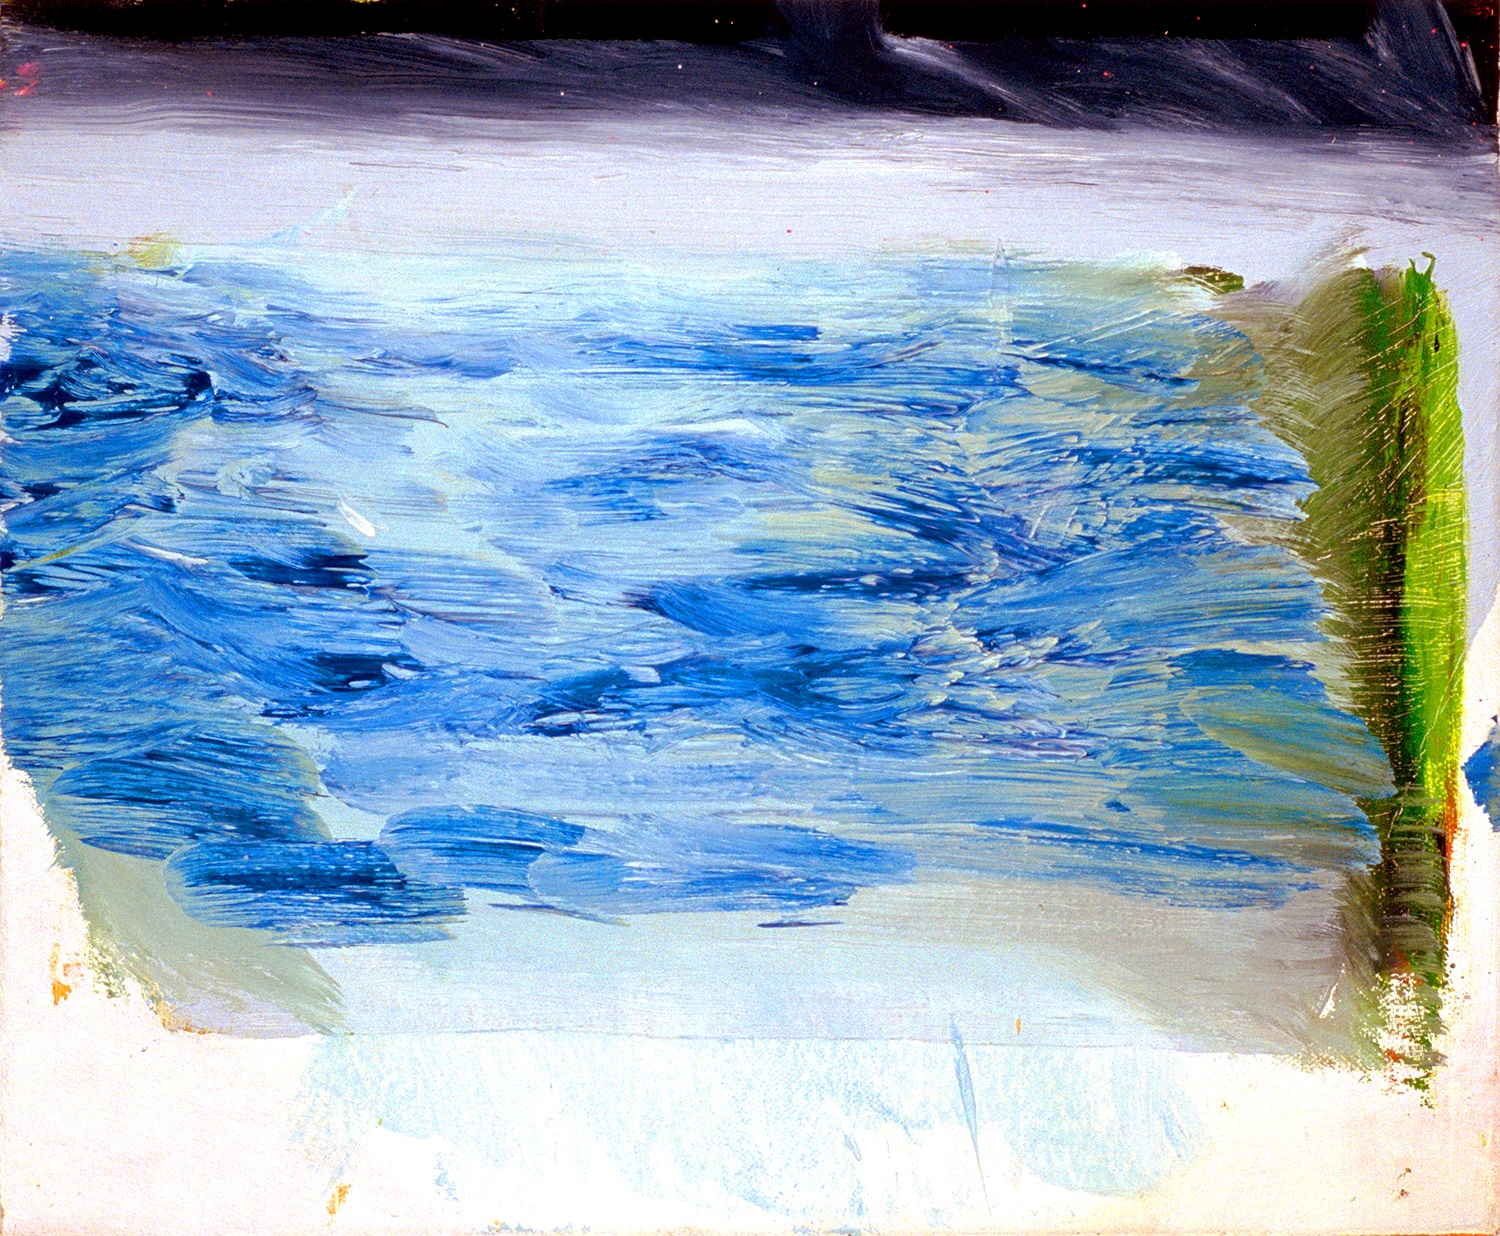   Sulphur , 2005, oil on canvas, 12 x 10 inches 